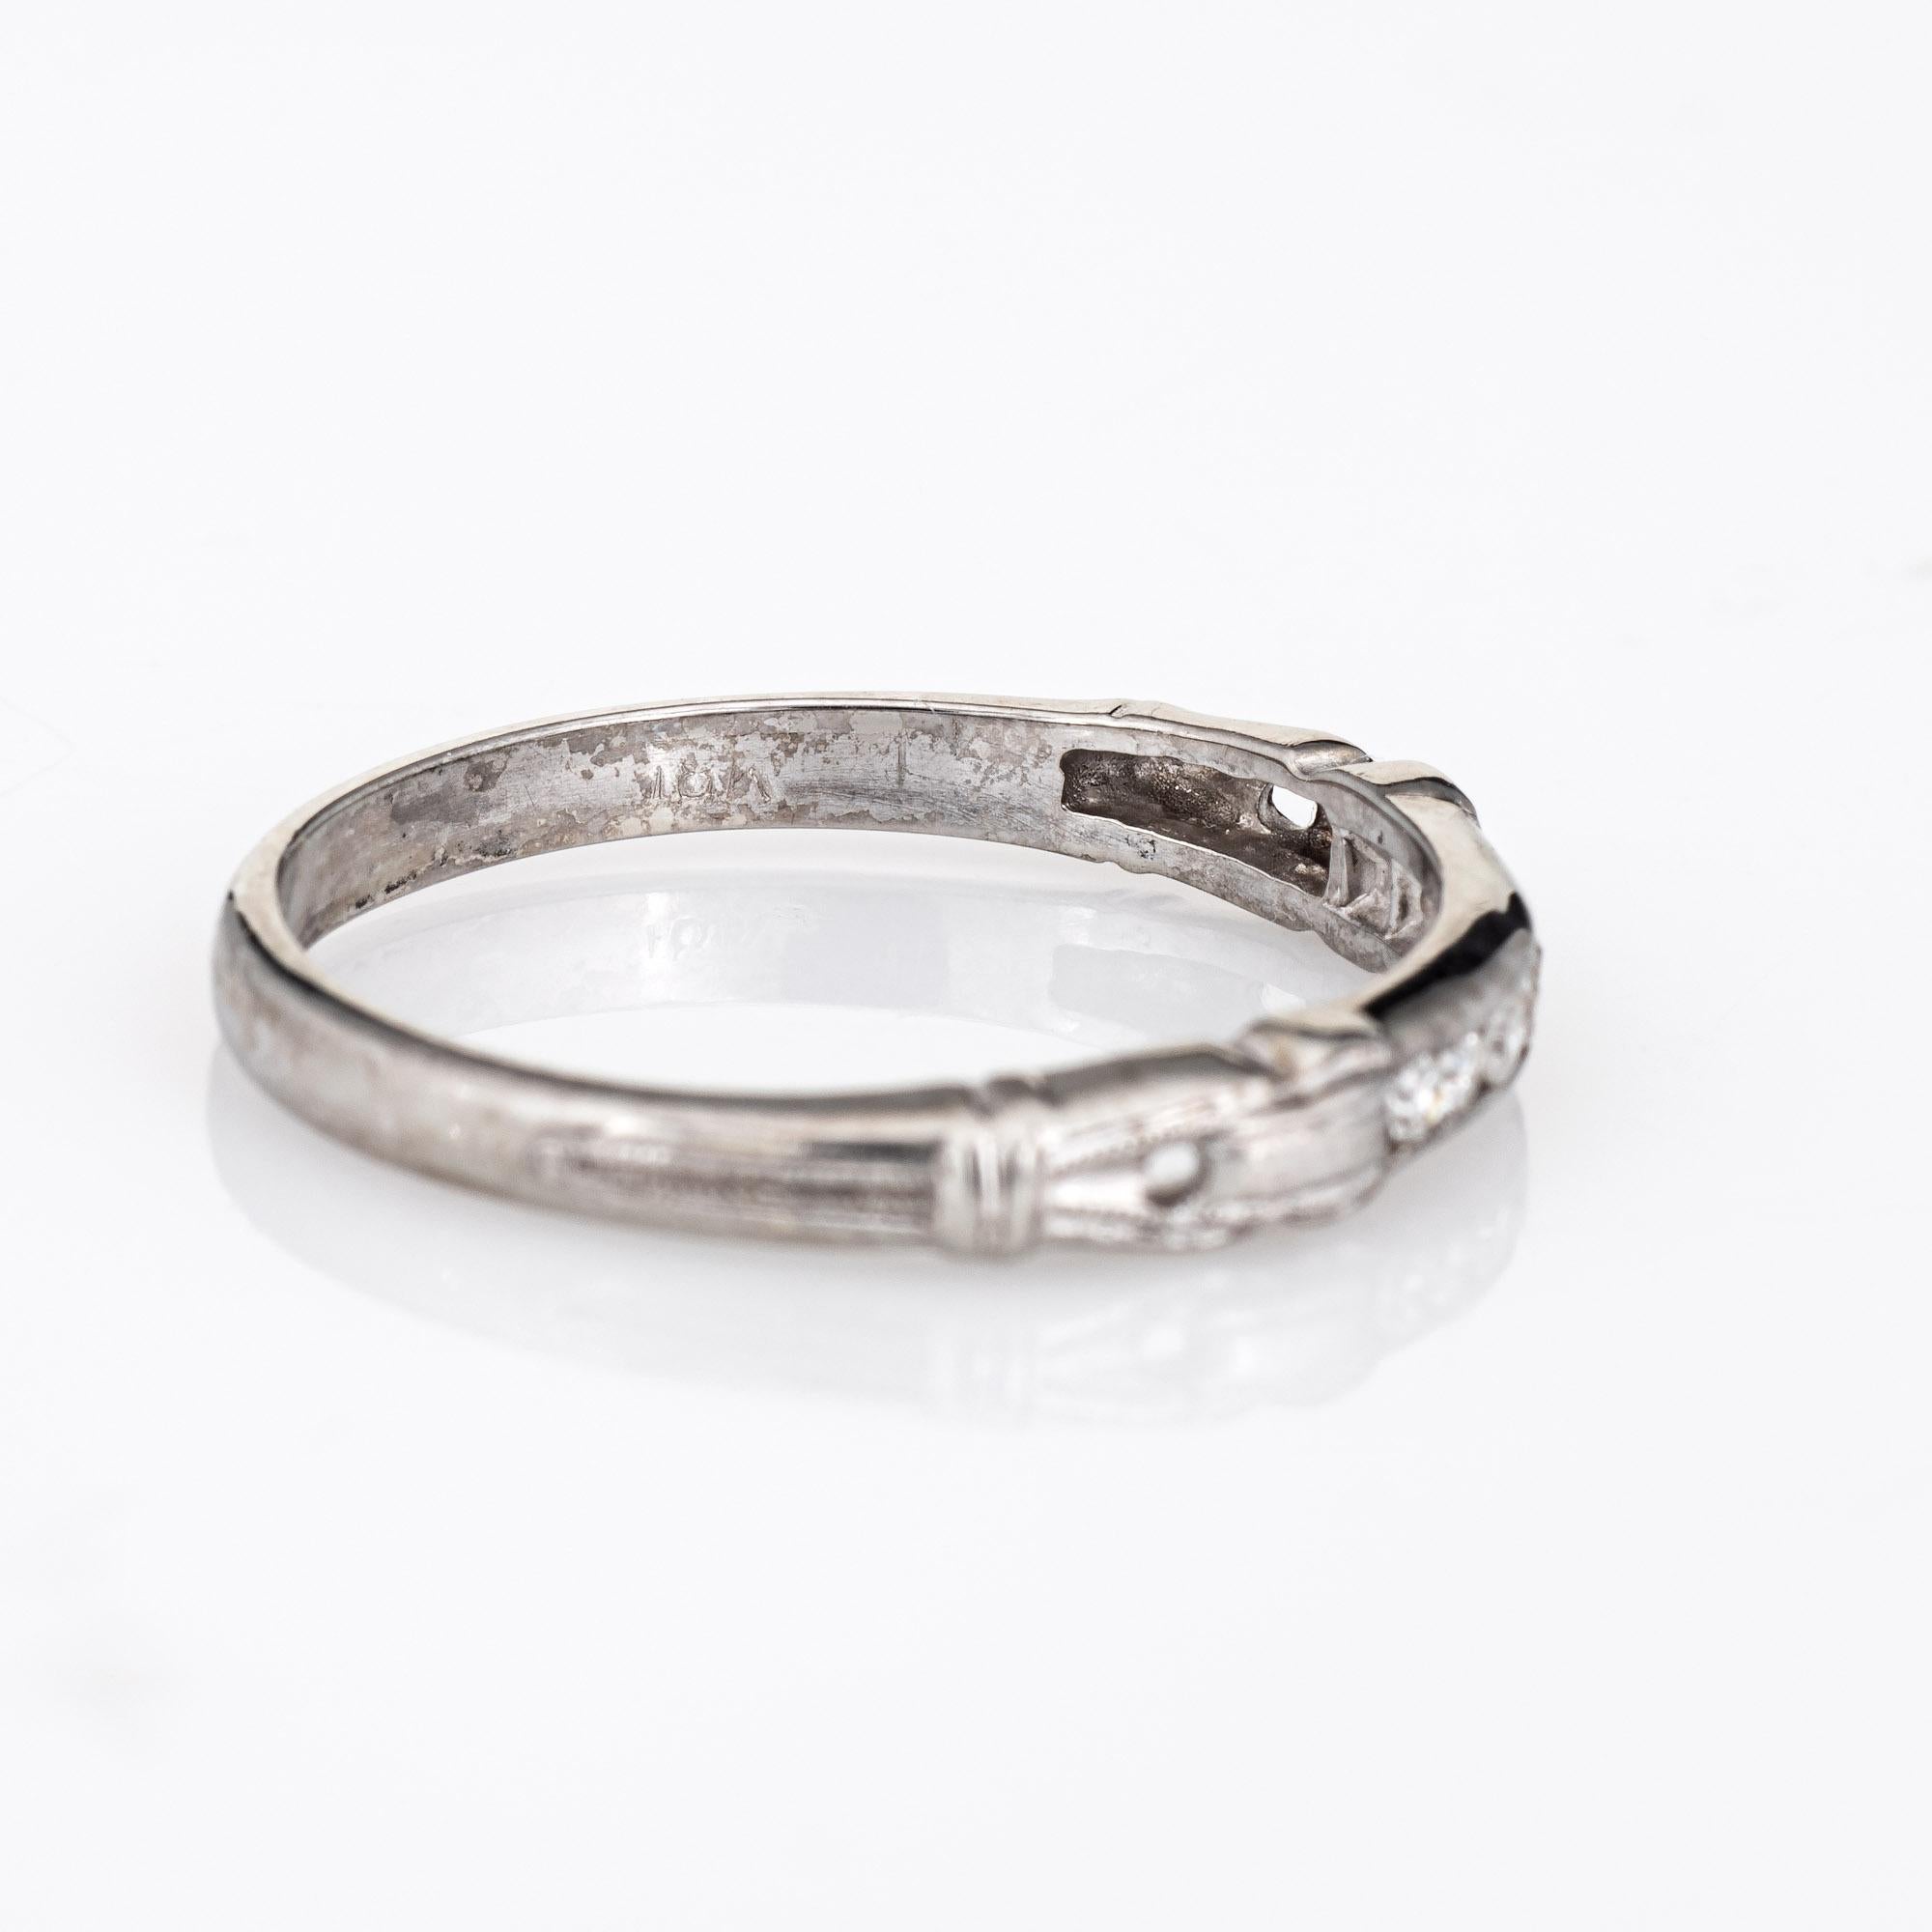 Vintage Art Deco Diamond Band 18k White Gold Wedding Ring Estate Jewelry For Sale 1